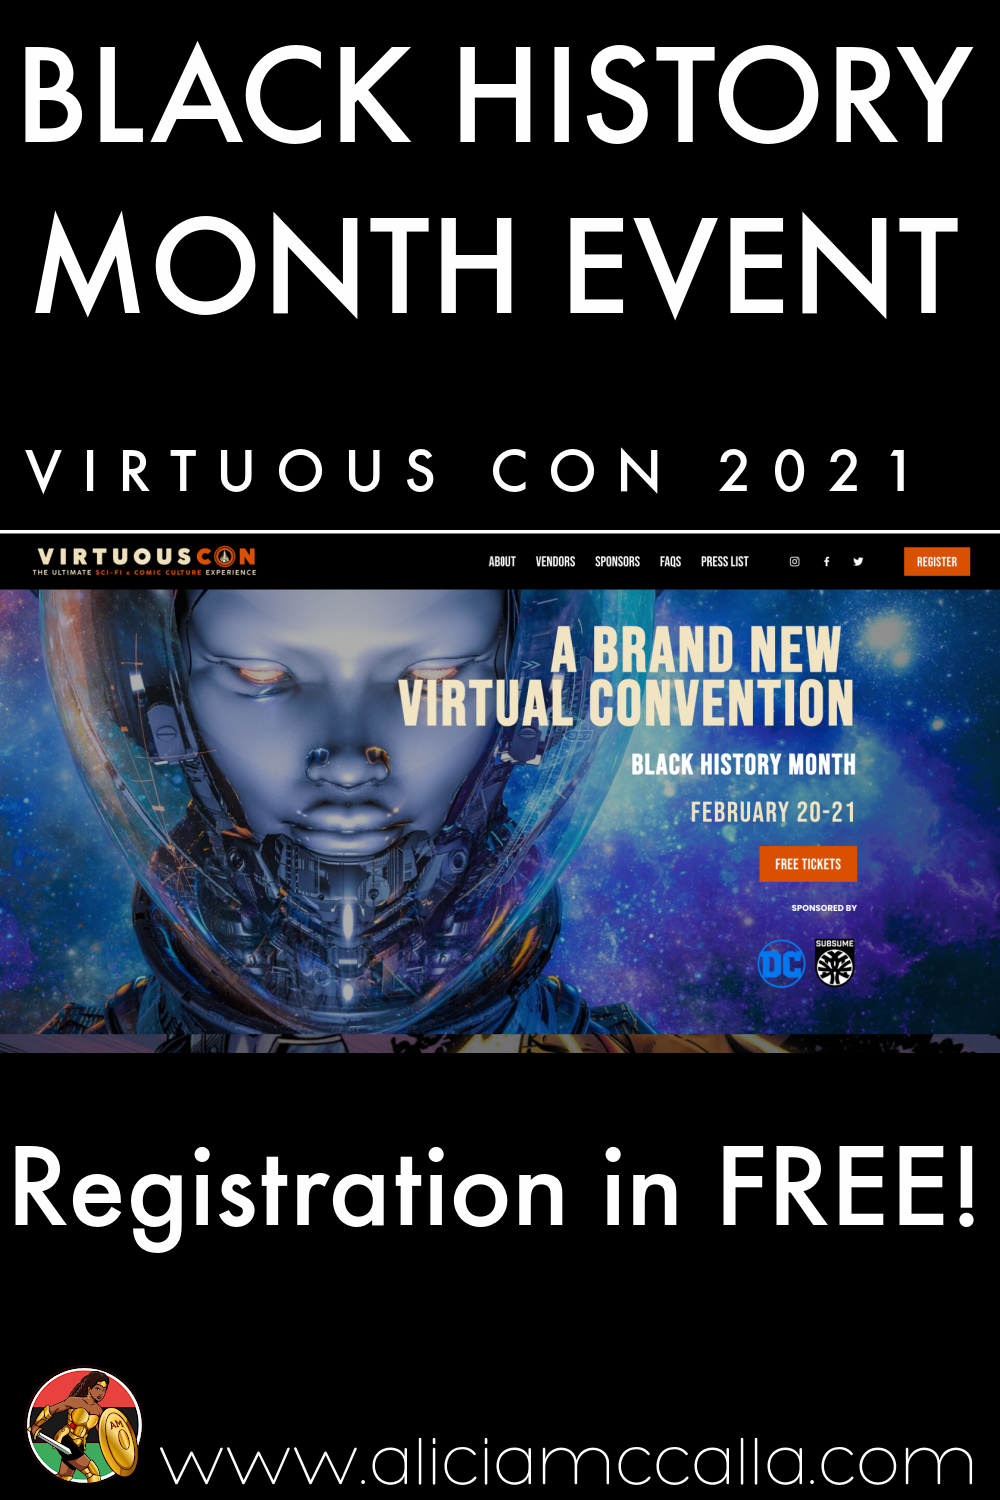 Black History Month Event: Virtuous Con 2021